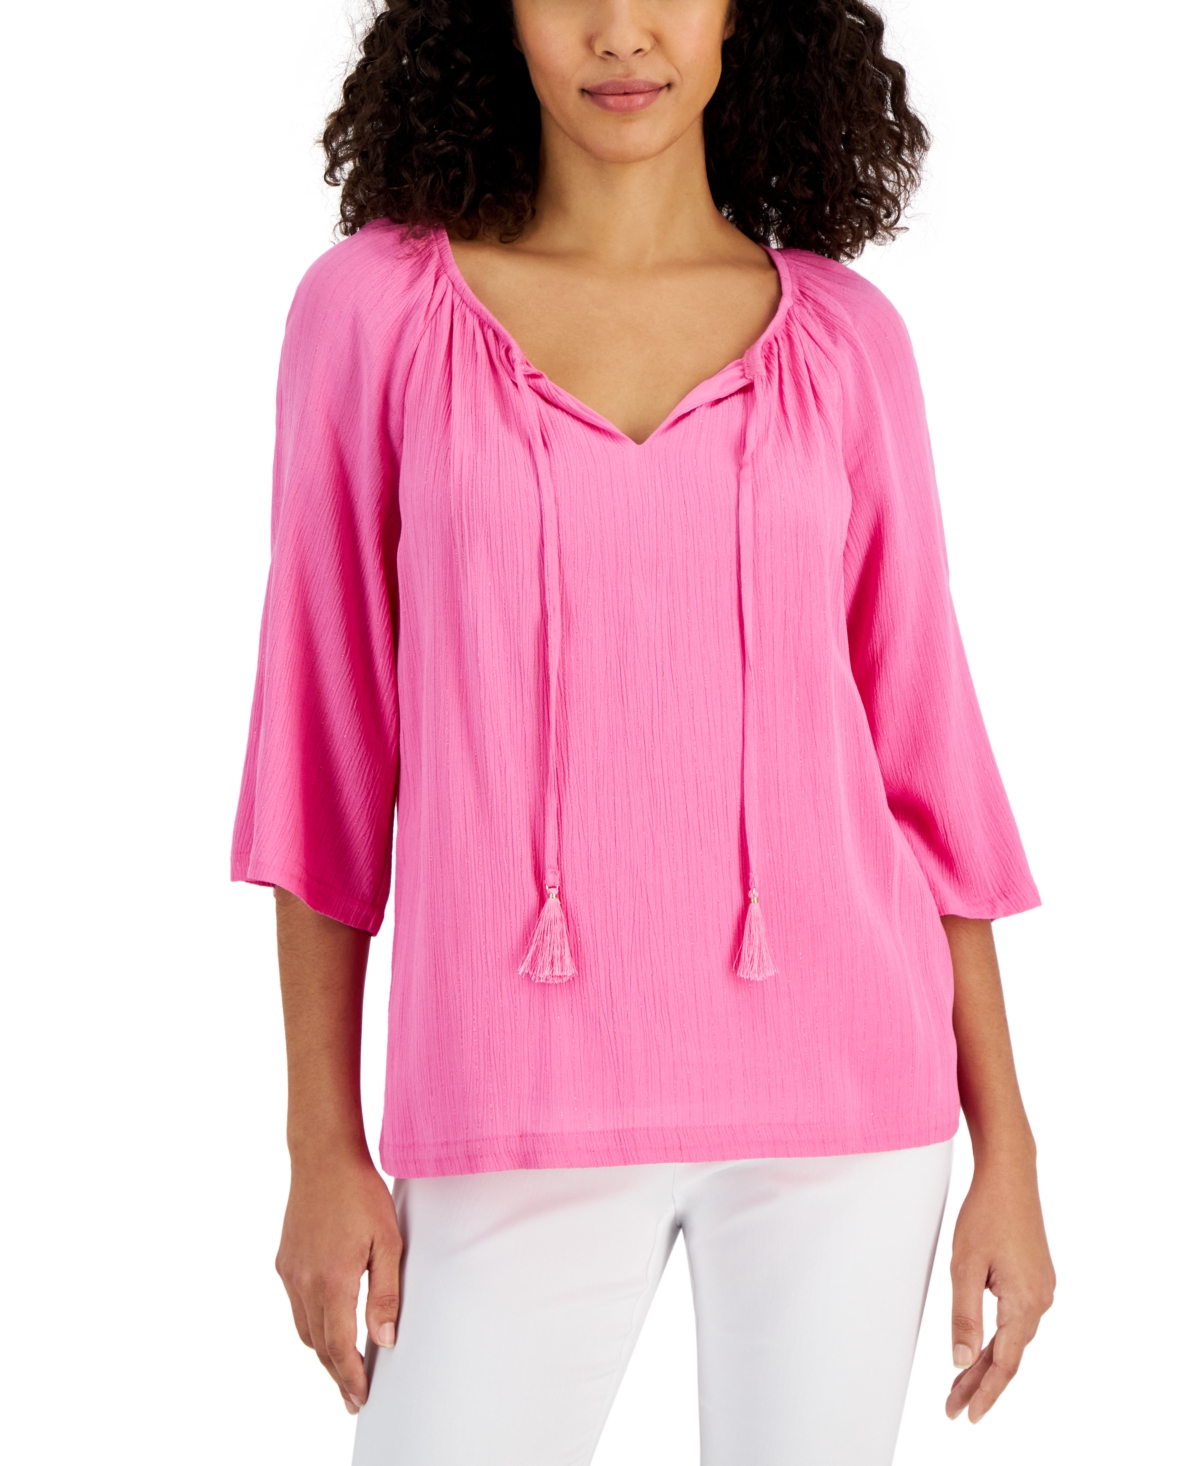 Women's Split-Neck 3/4 Sleeve Tasseled-Tie Top, Created for Macy's - Phlox Pink